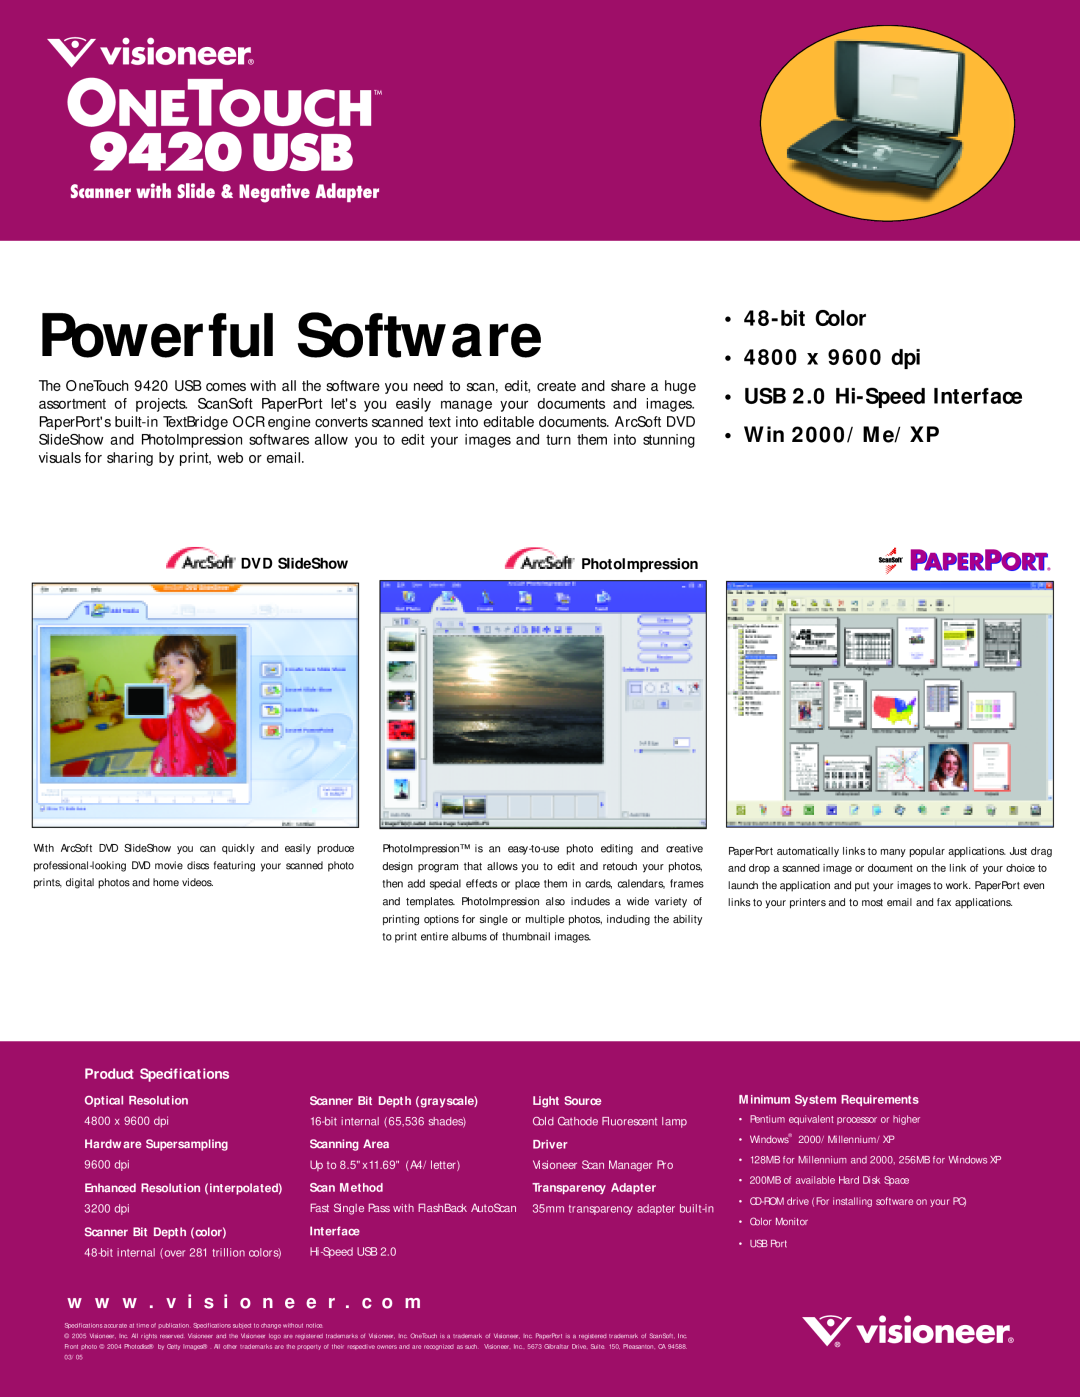 Visioneer 9420 USB bit Color 4800 x 9600 dpi, Win 2000/Me/XP, Powerful Software, USB 2.0 Hi-Speed Interface, DVD SlideShow 